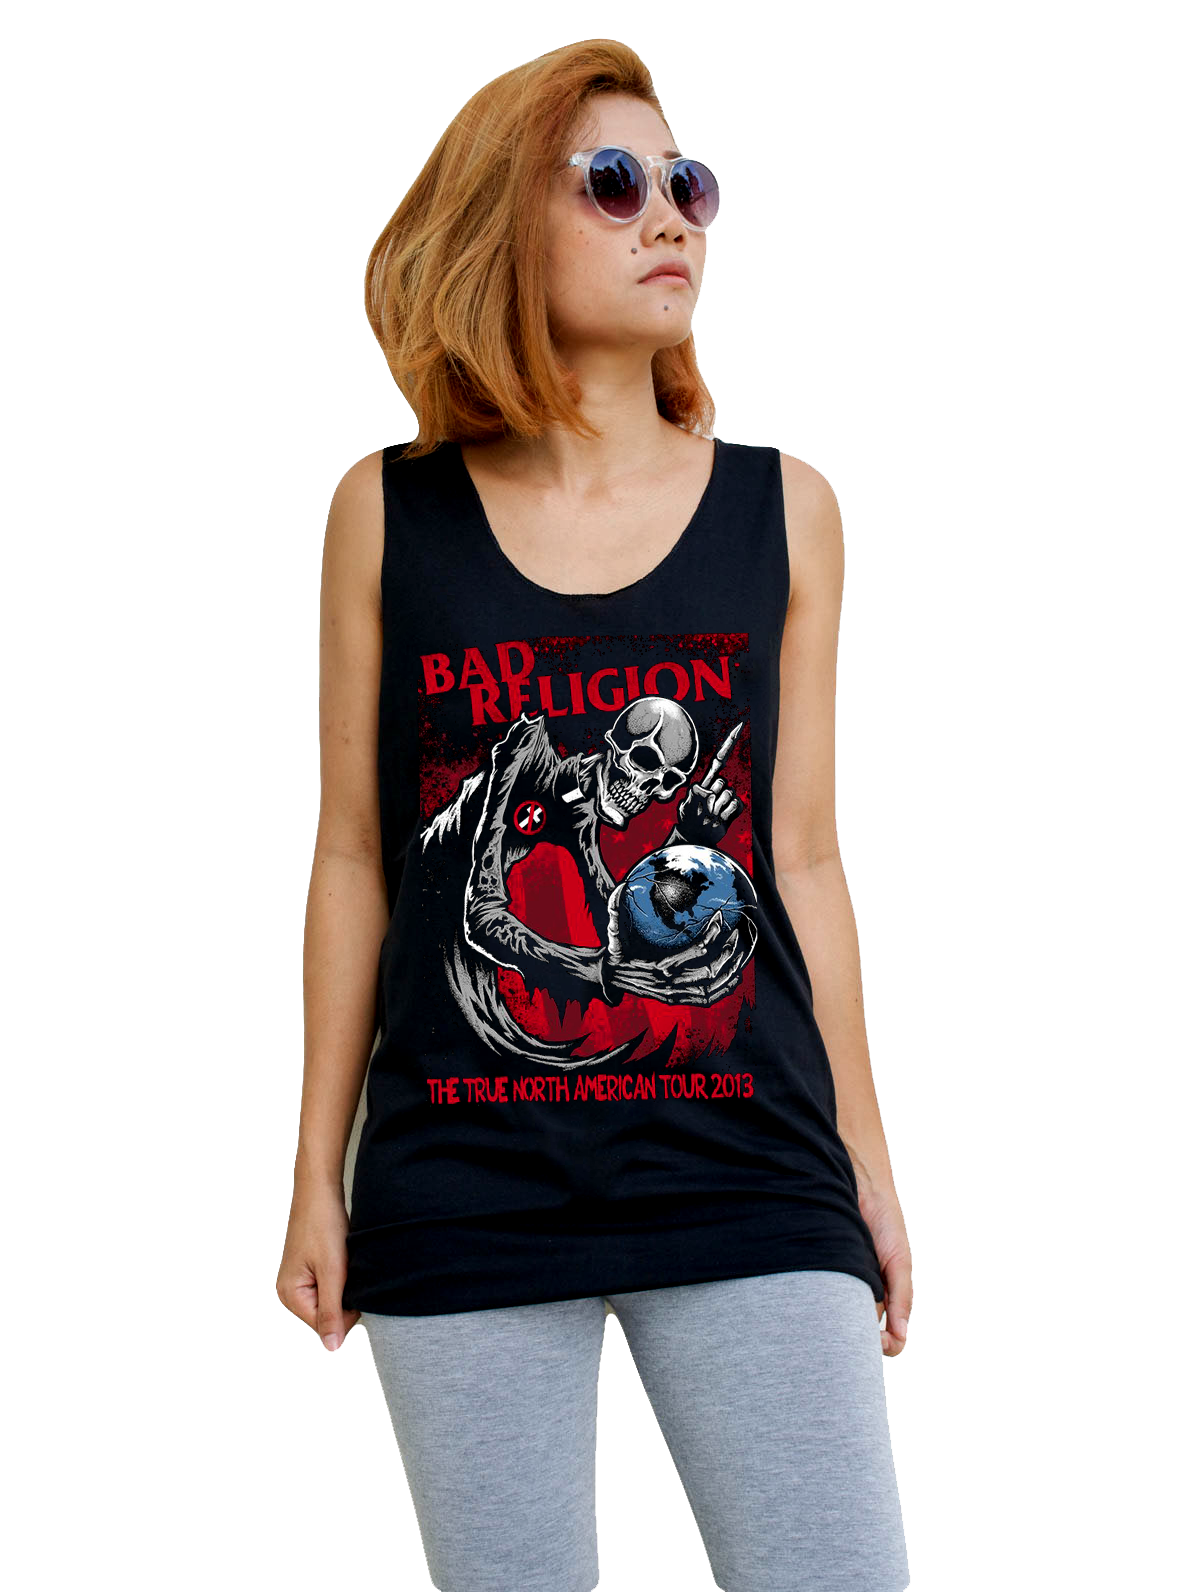 Unisex Bad Religion Tank-Top Singlet vest Sleeveless T-shirt